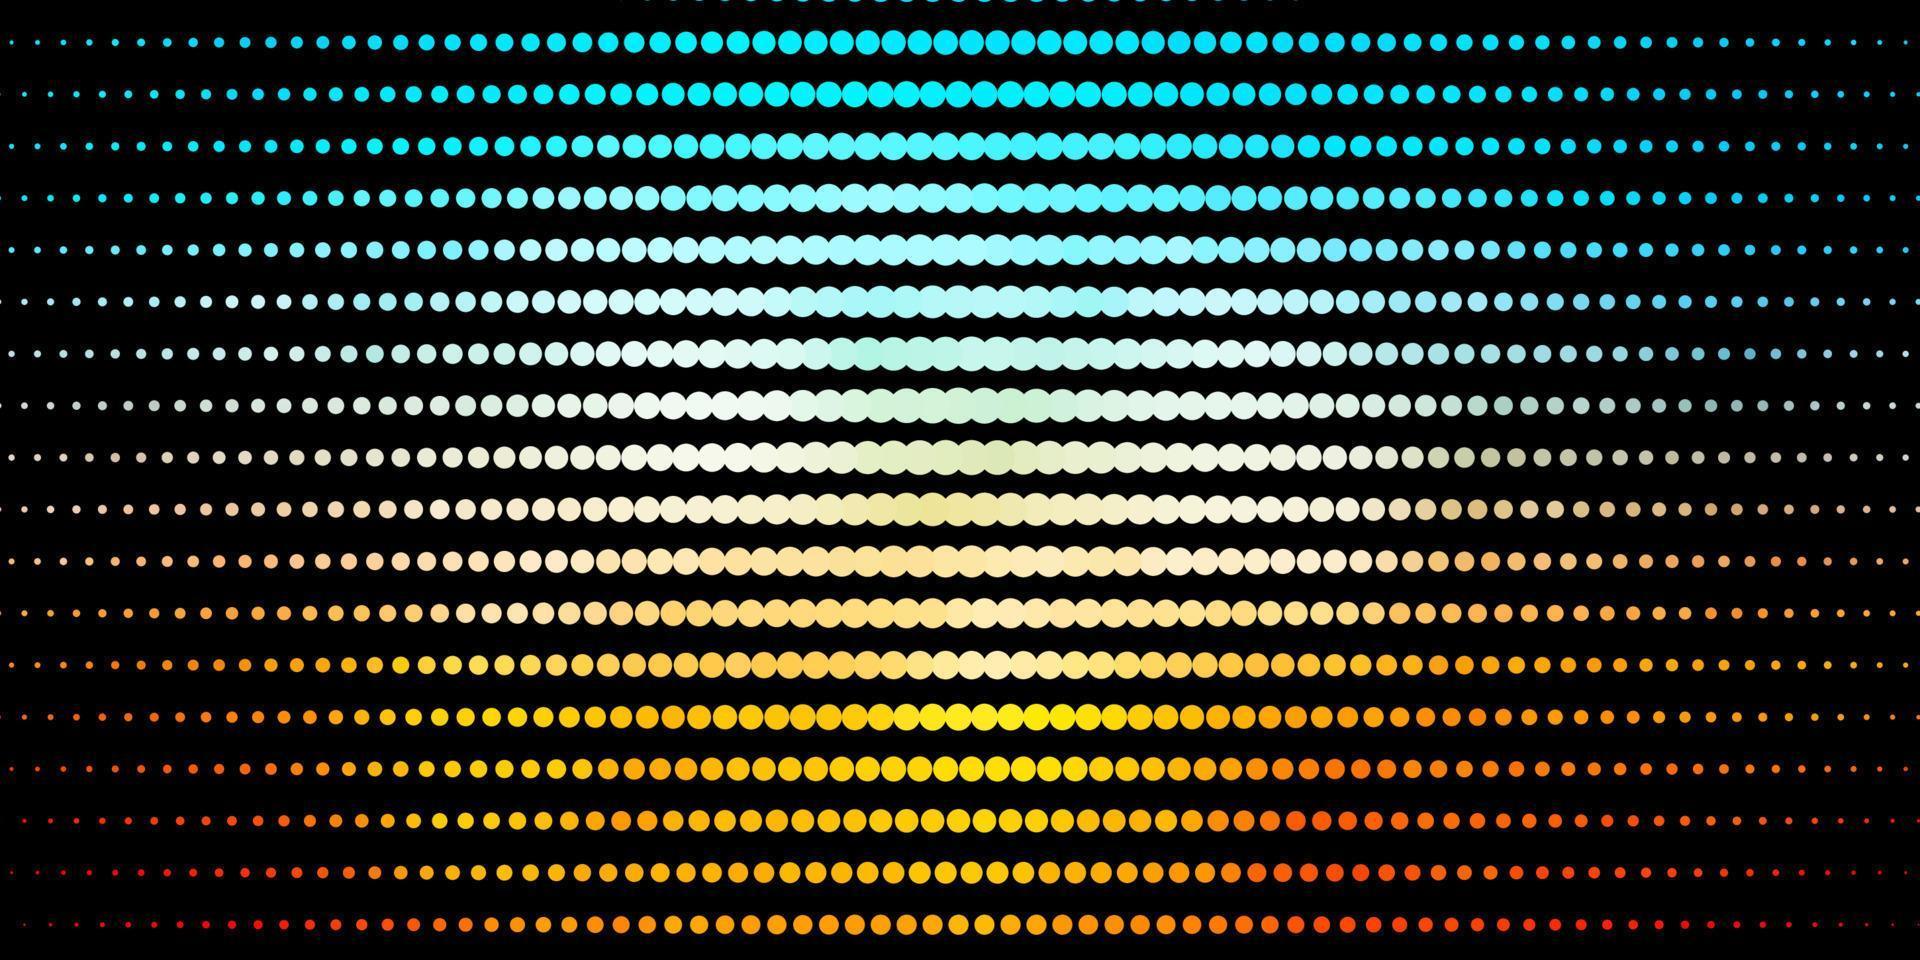 pano de fundo vector azul e amarelo escuro com pontos.